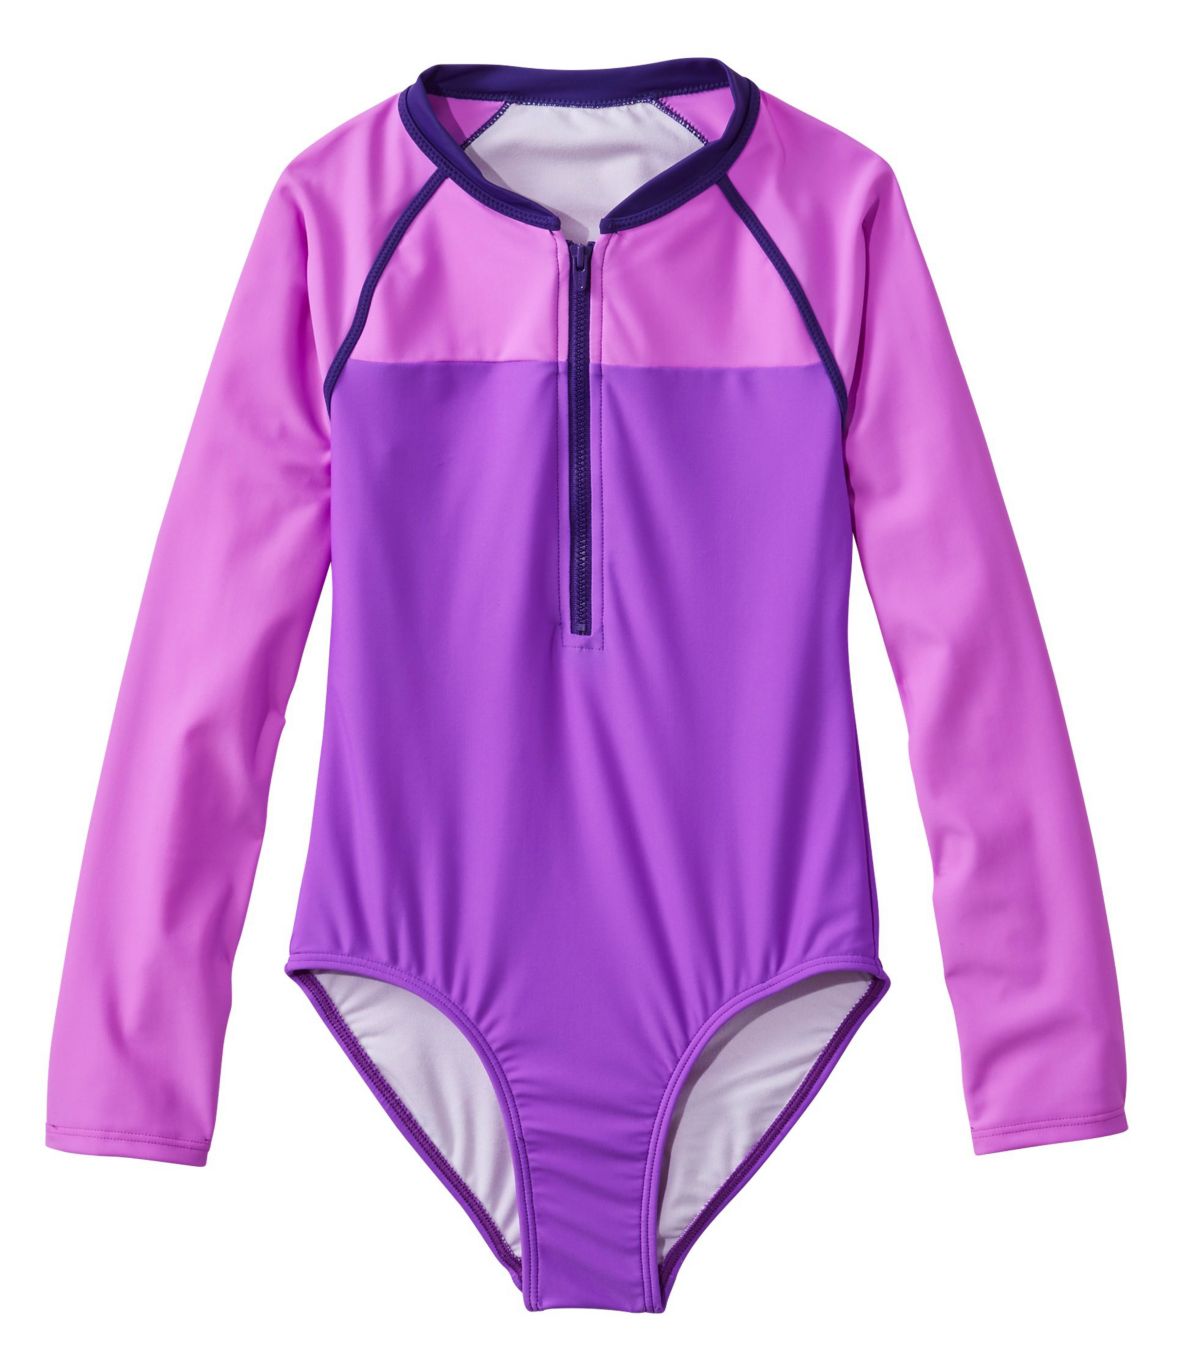 Girls' Watersports Swimsuit II, One-Piece, Long-Sleeve Colorblock